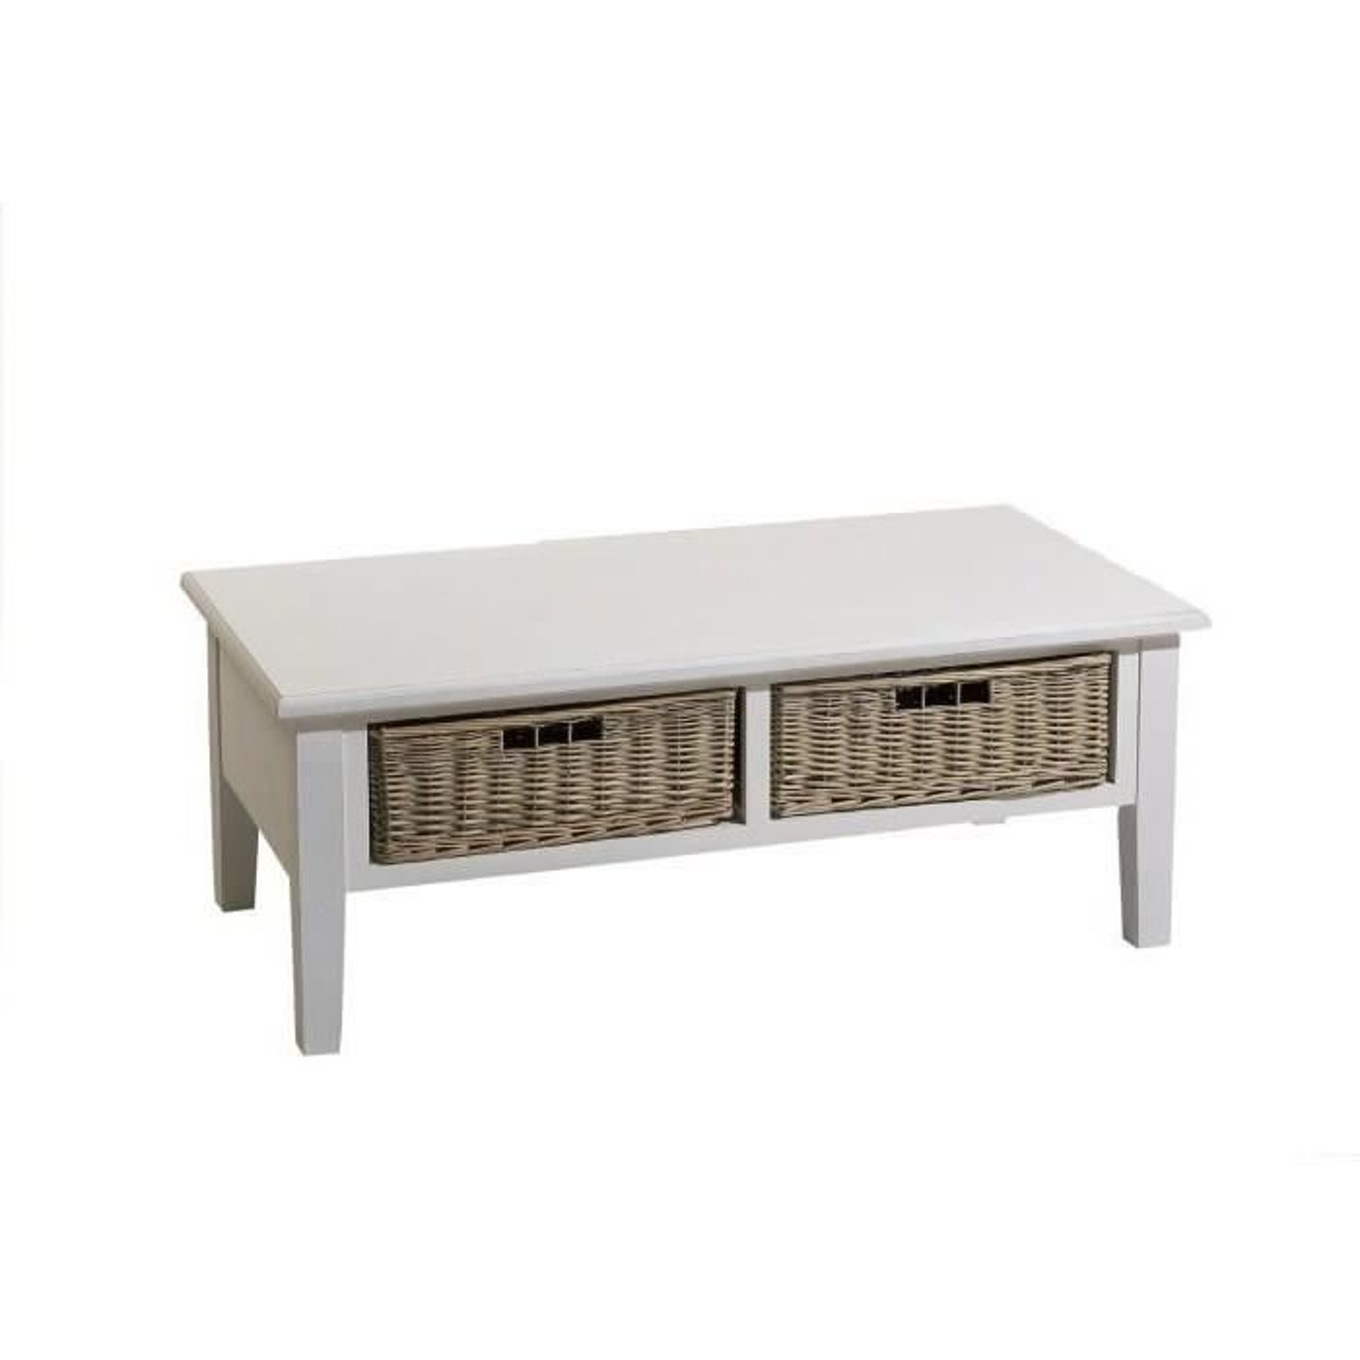 Table basse bois blanc avec tiroirs